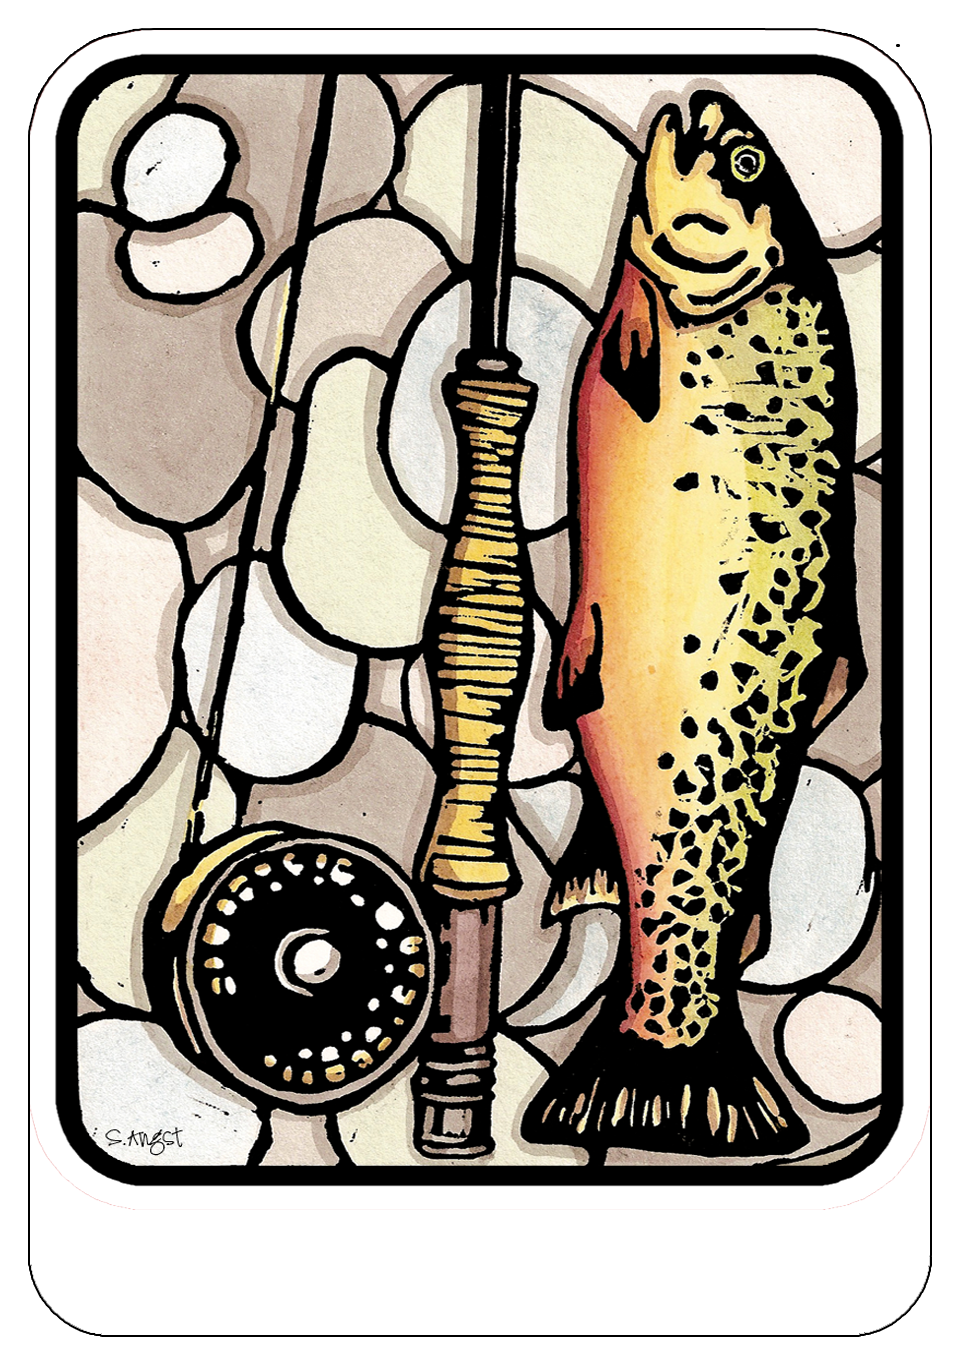 Name Dropped Sticker - QTY 250: Fish